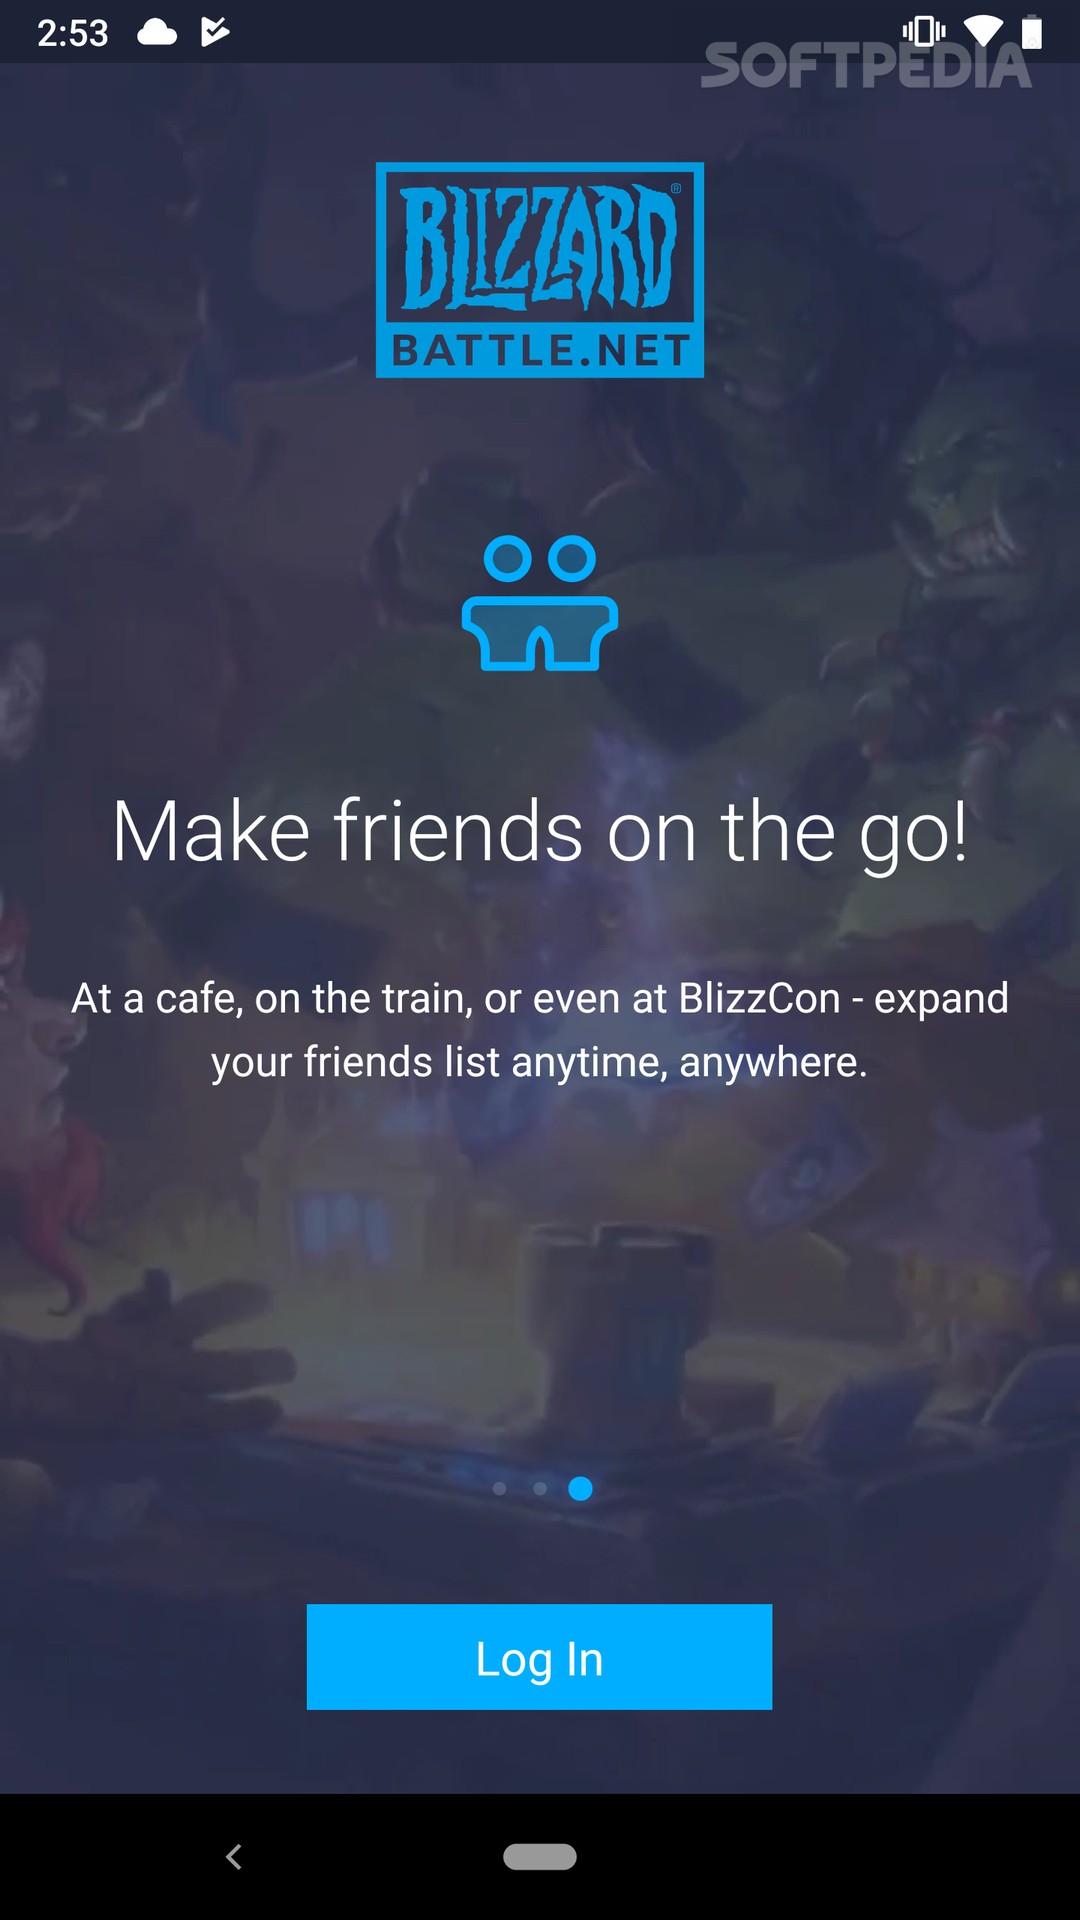 blizzard battle.net android